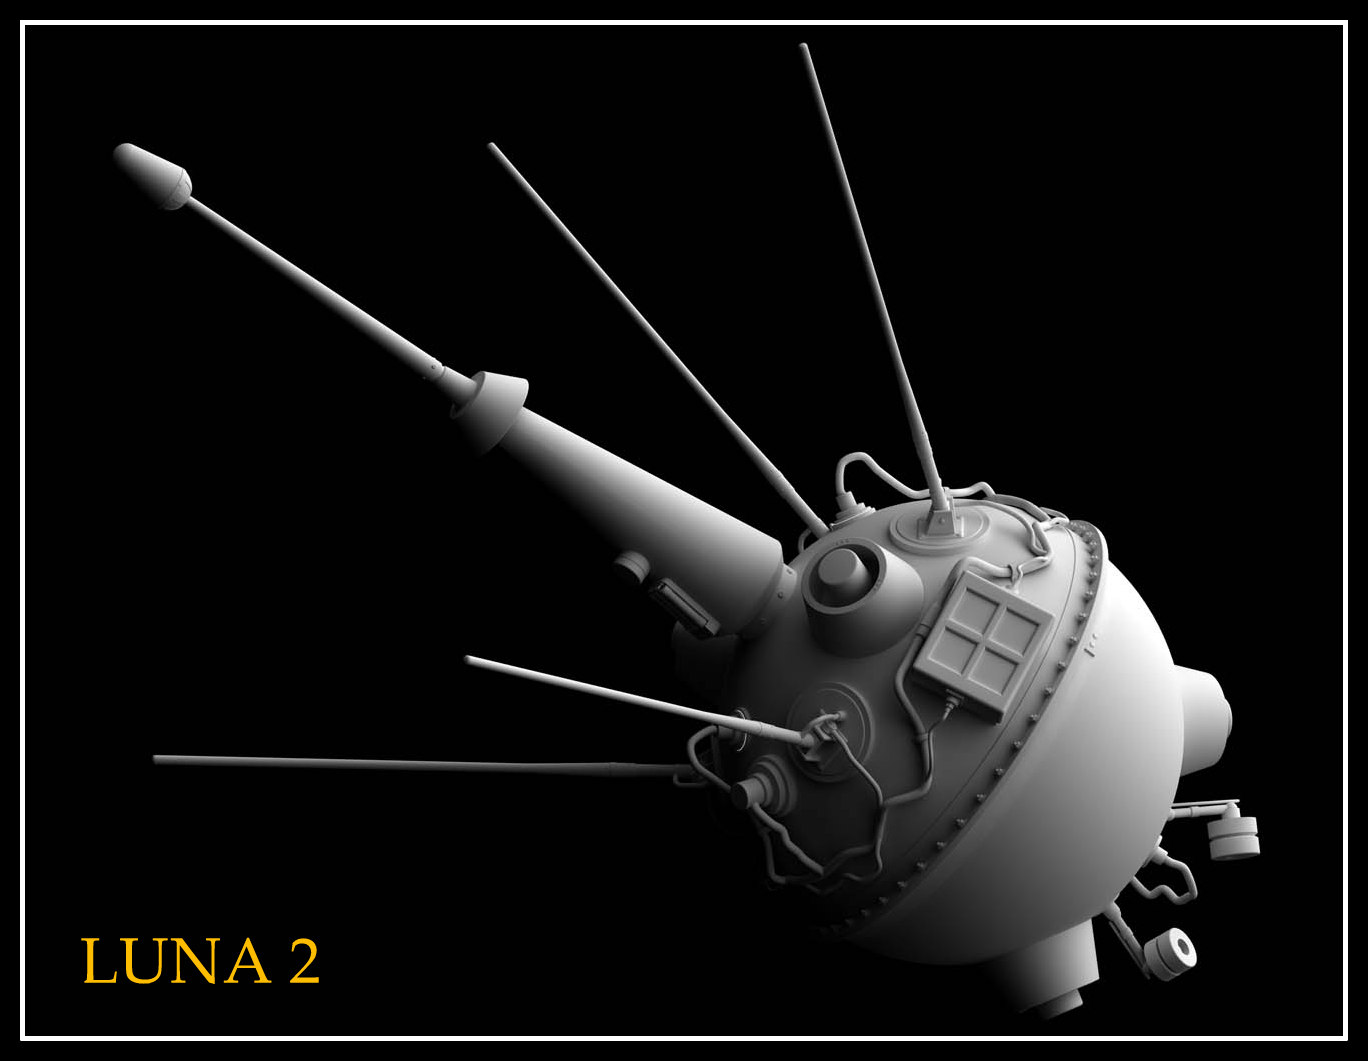 Второй советский спутник. АМС Луна 1. Автрматическаямежпланетнаястанциялуна2. АМС Луна 2. Советская межпланетная станция «Луна-1».